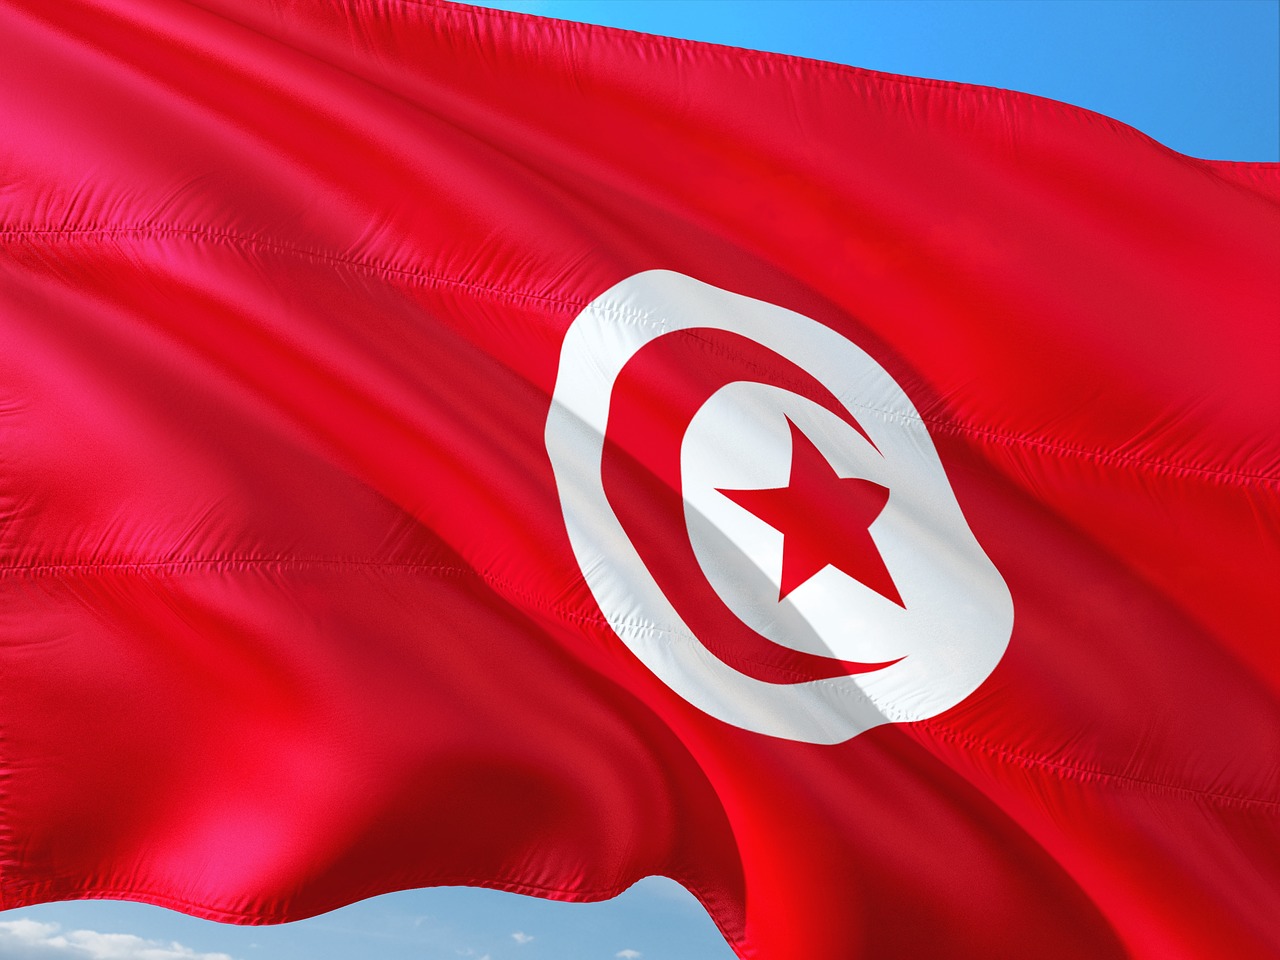 Tunisia prosecutor blocks release of opposition leader